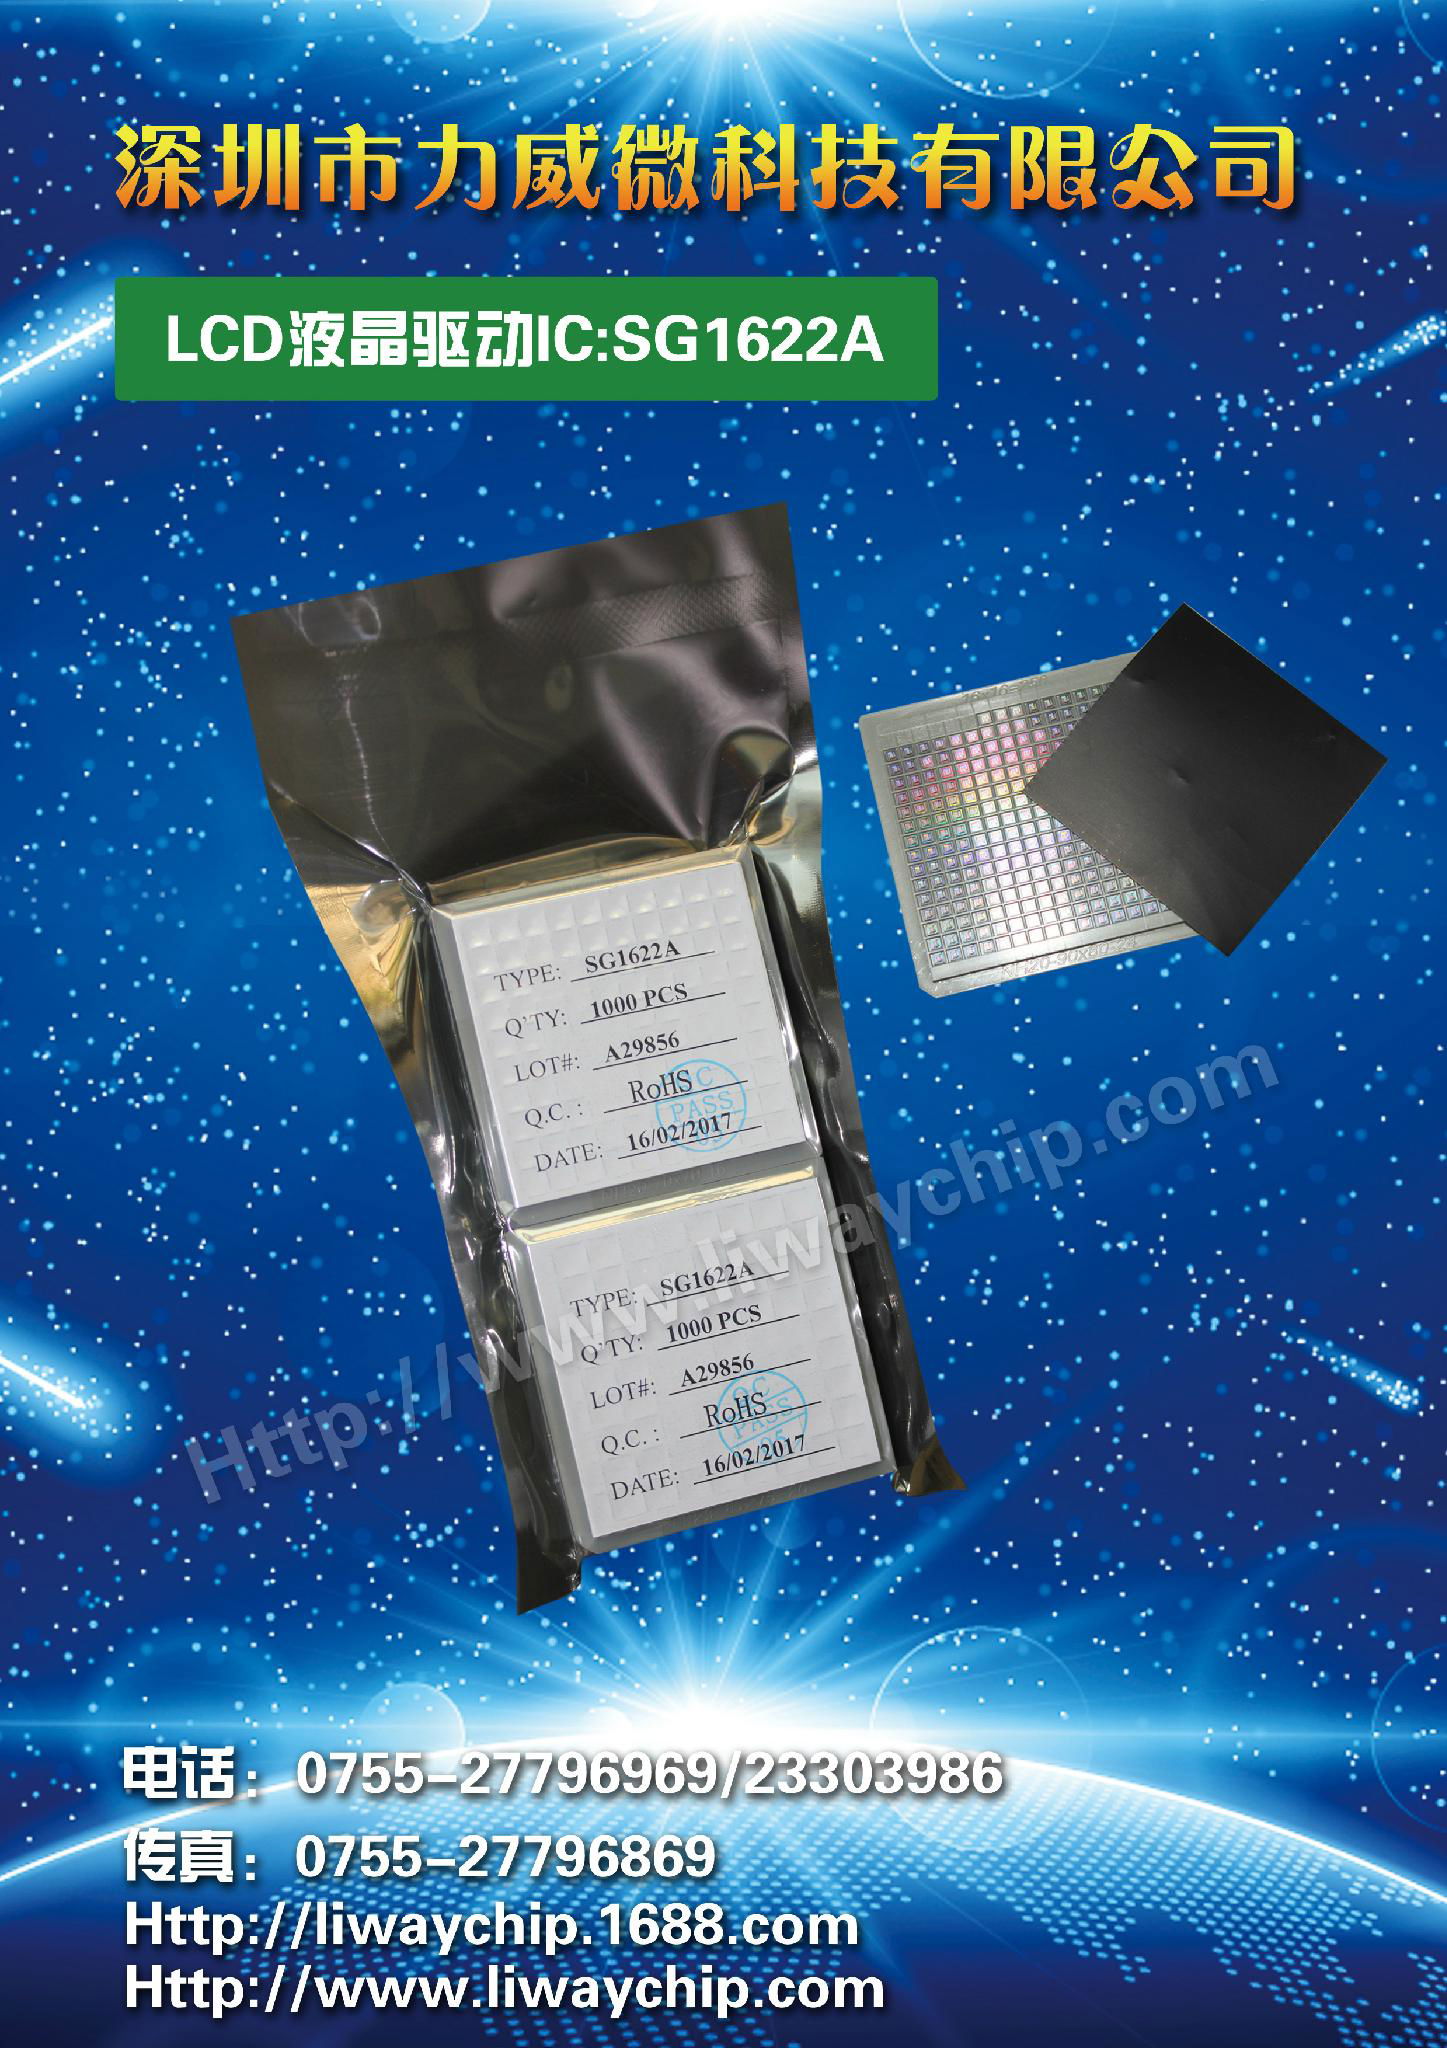 LCD液晶驅動IC   HT1622  DICE  3